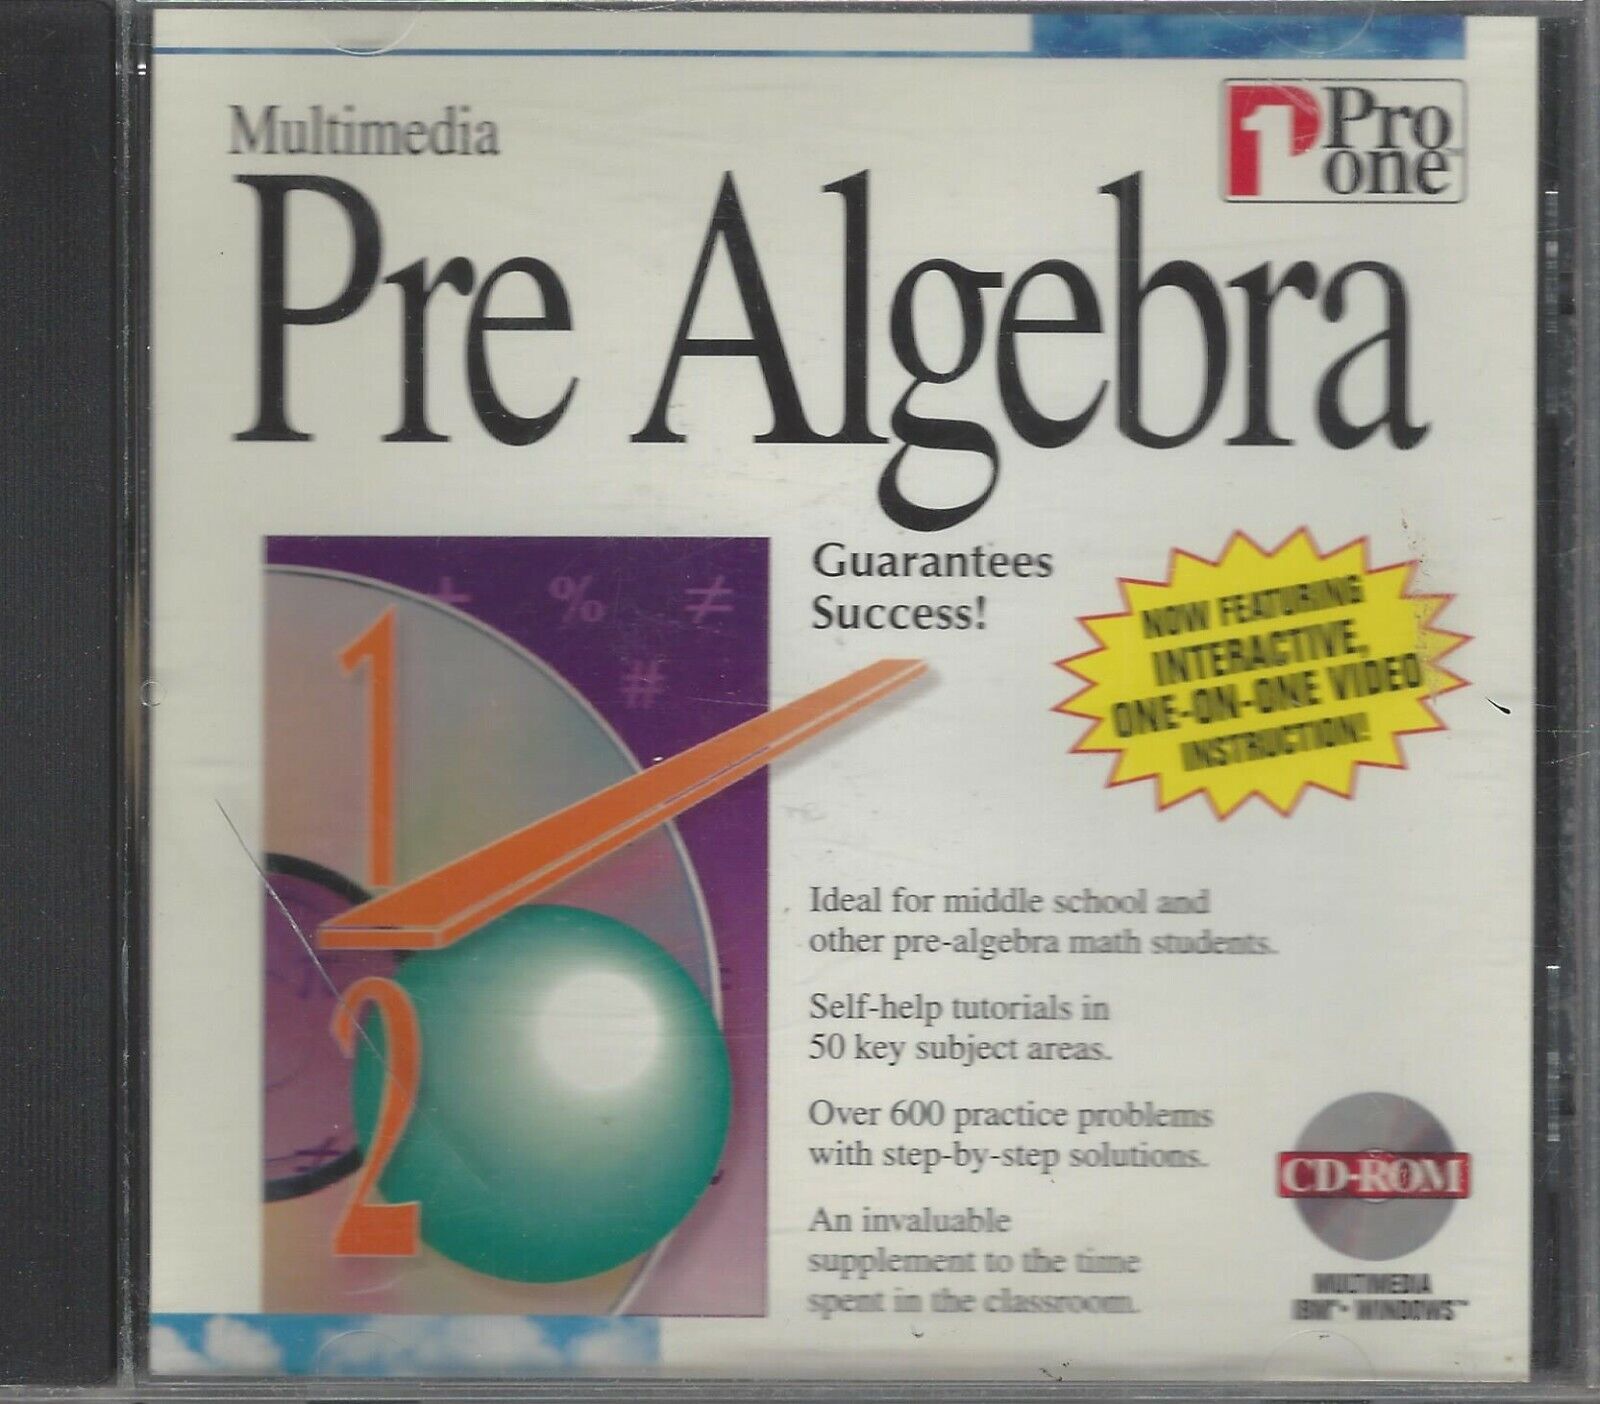 Multimedia Pre Algebra (Windows, 1995)